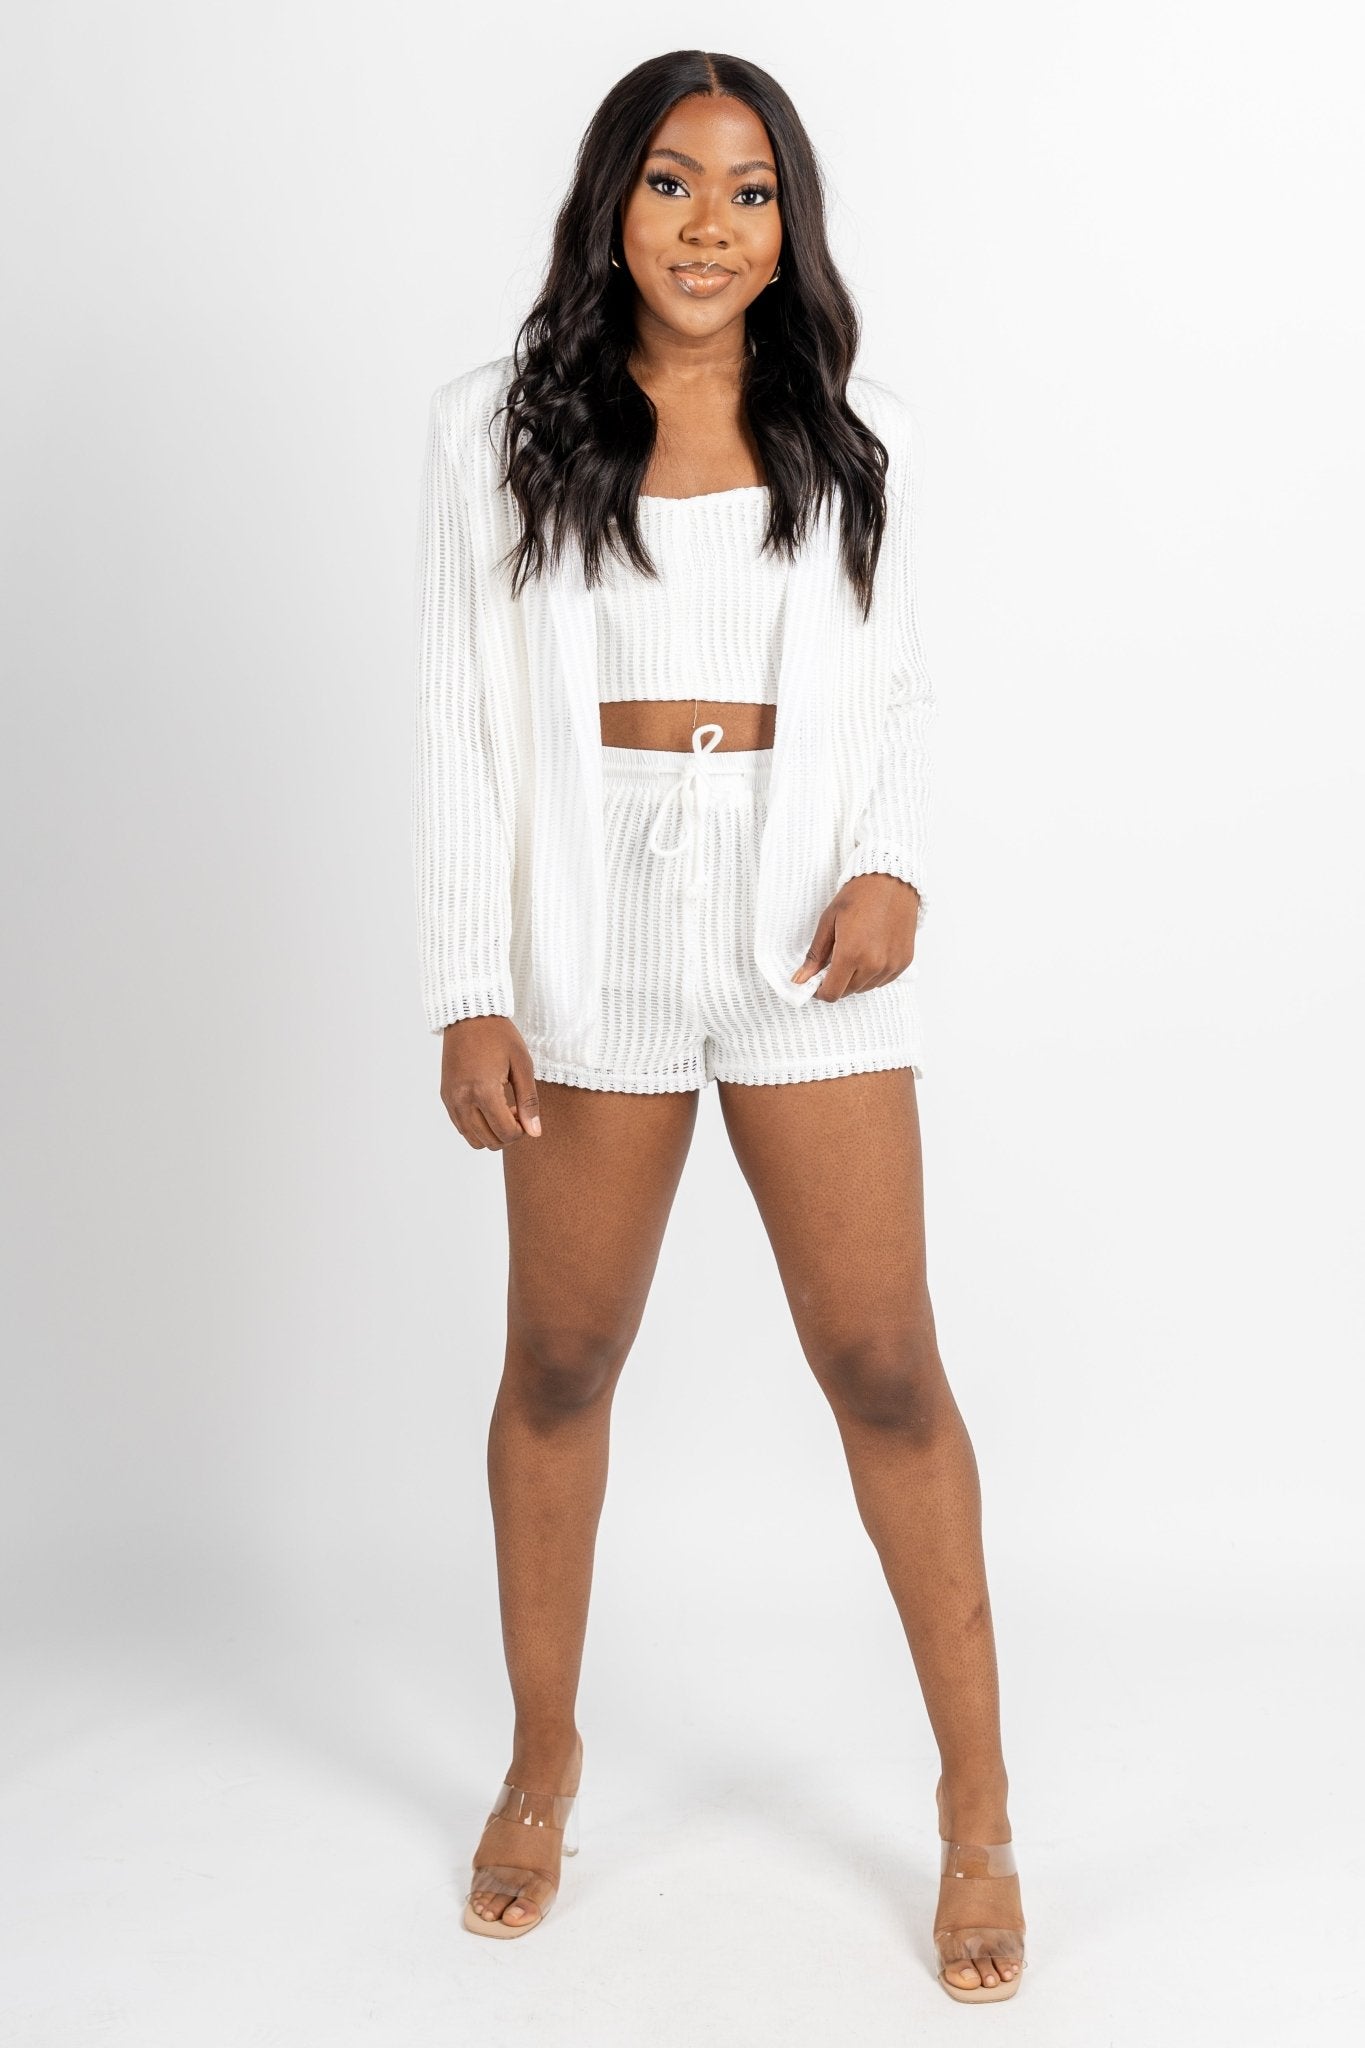 Crochet blazer jacket white – Unique Blazers | Cute Blazers For Women at Lush Fashion Lounge Boutique in Oklahoma City